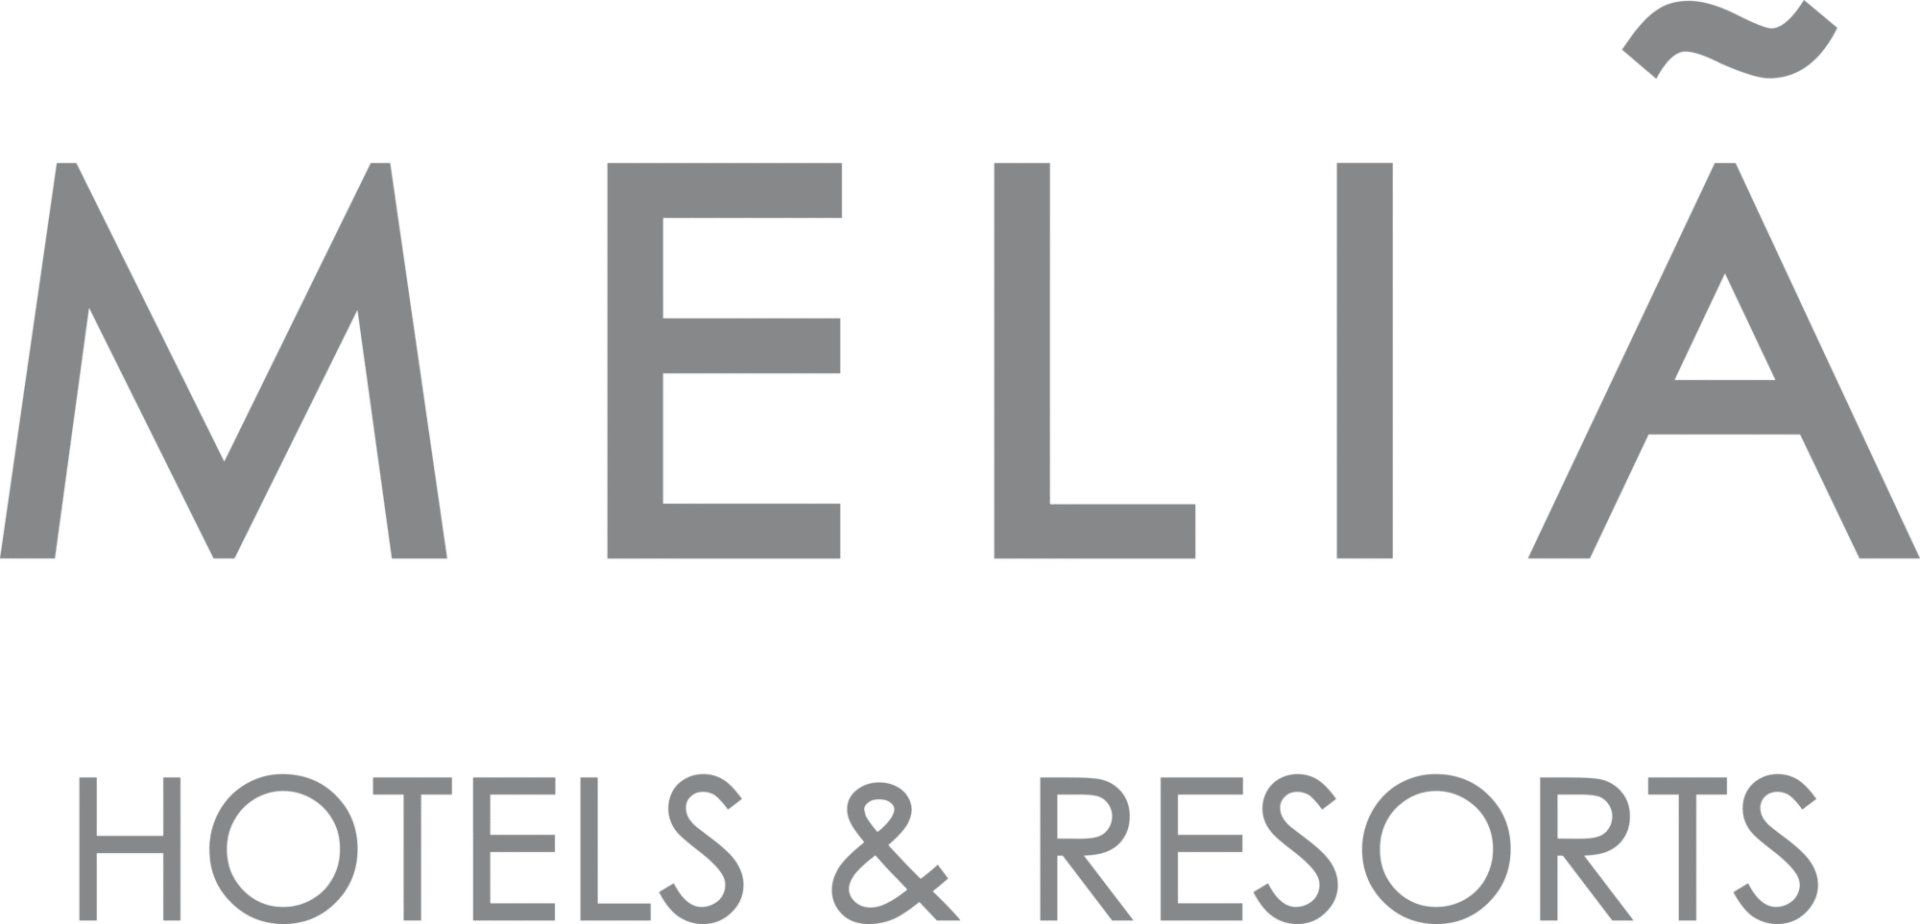 Melia Hotels International Logo